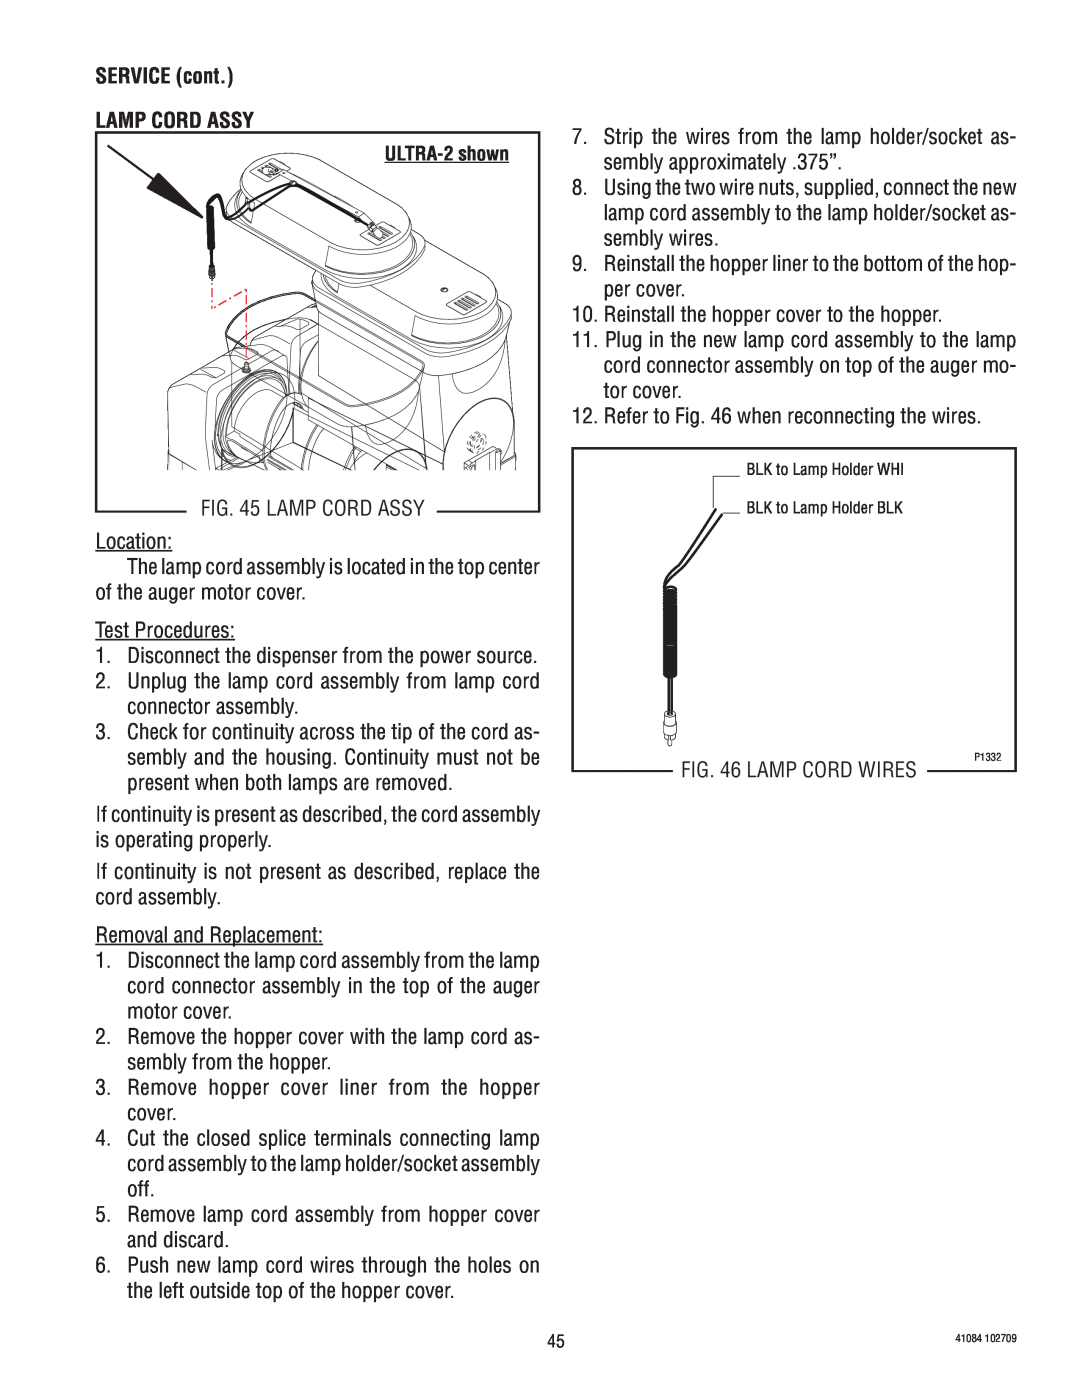 Bunn ULTRA-1 manual SERVICE cont LAMP CORD ASSY, Lamp Cord Assy 